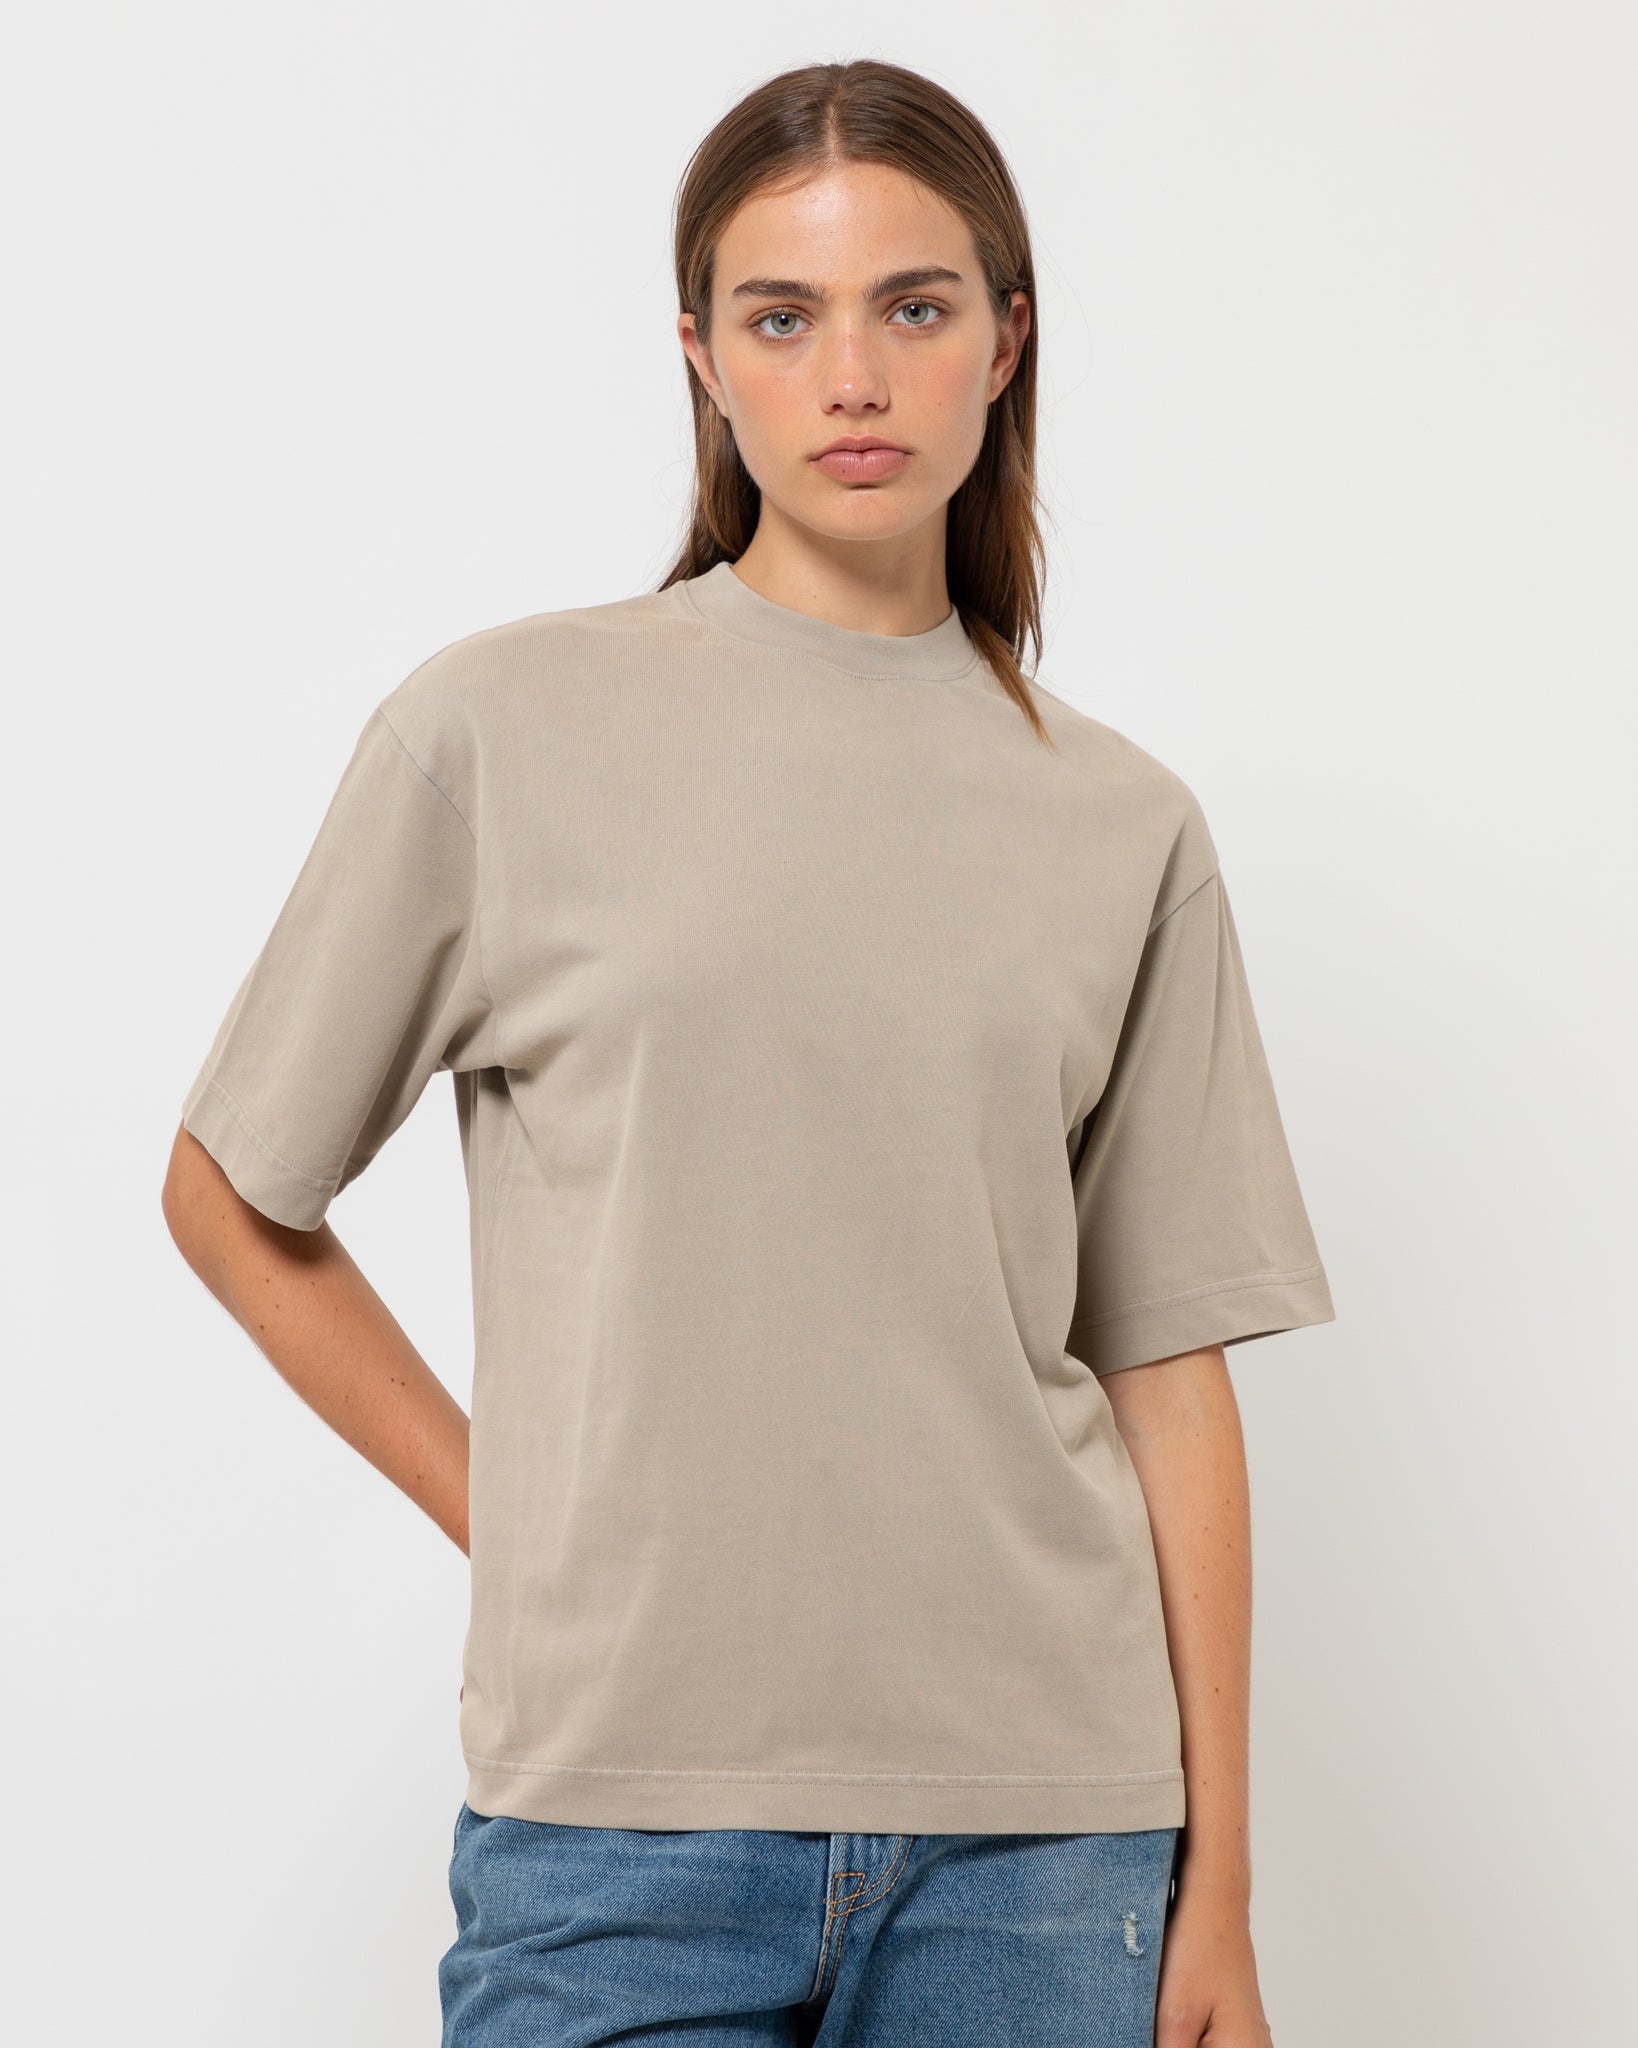 Concrete Grey T-Shirt